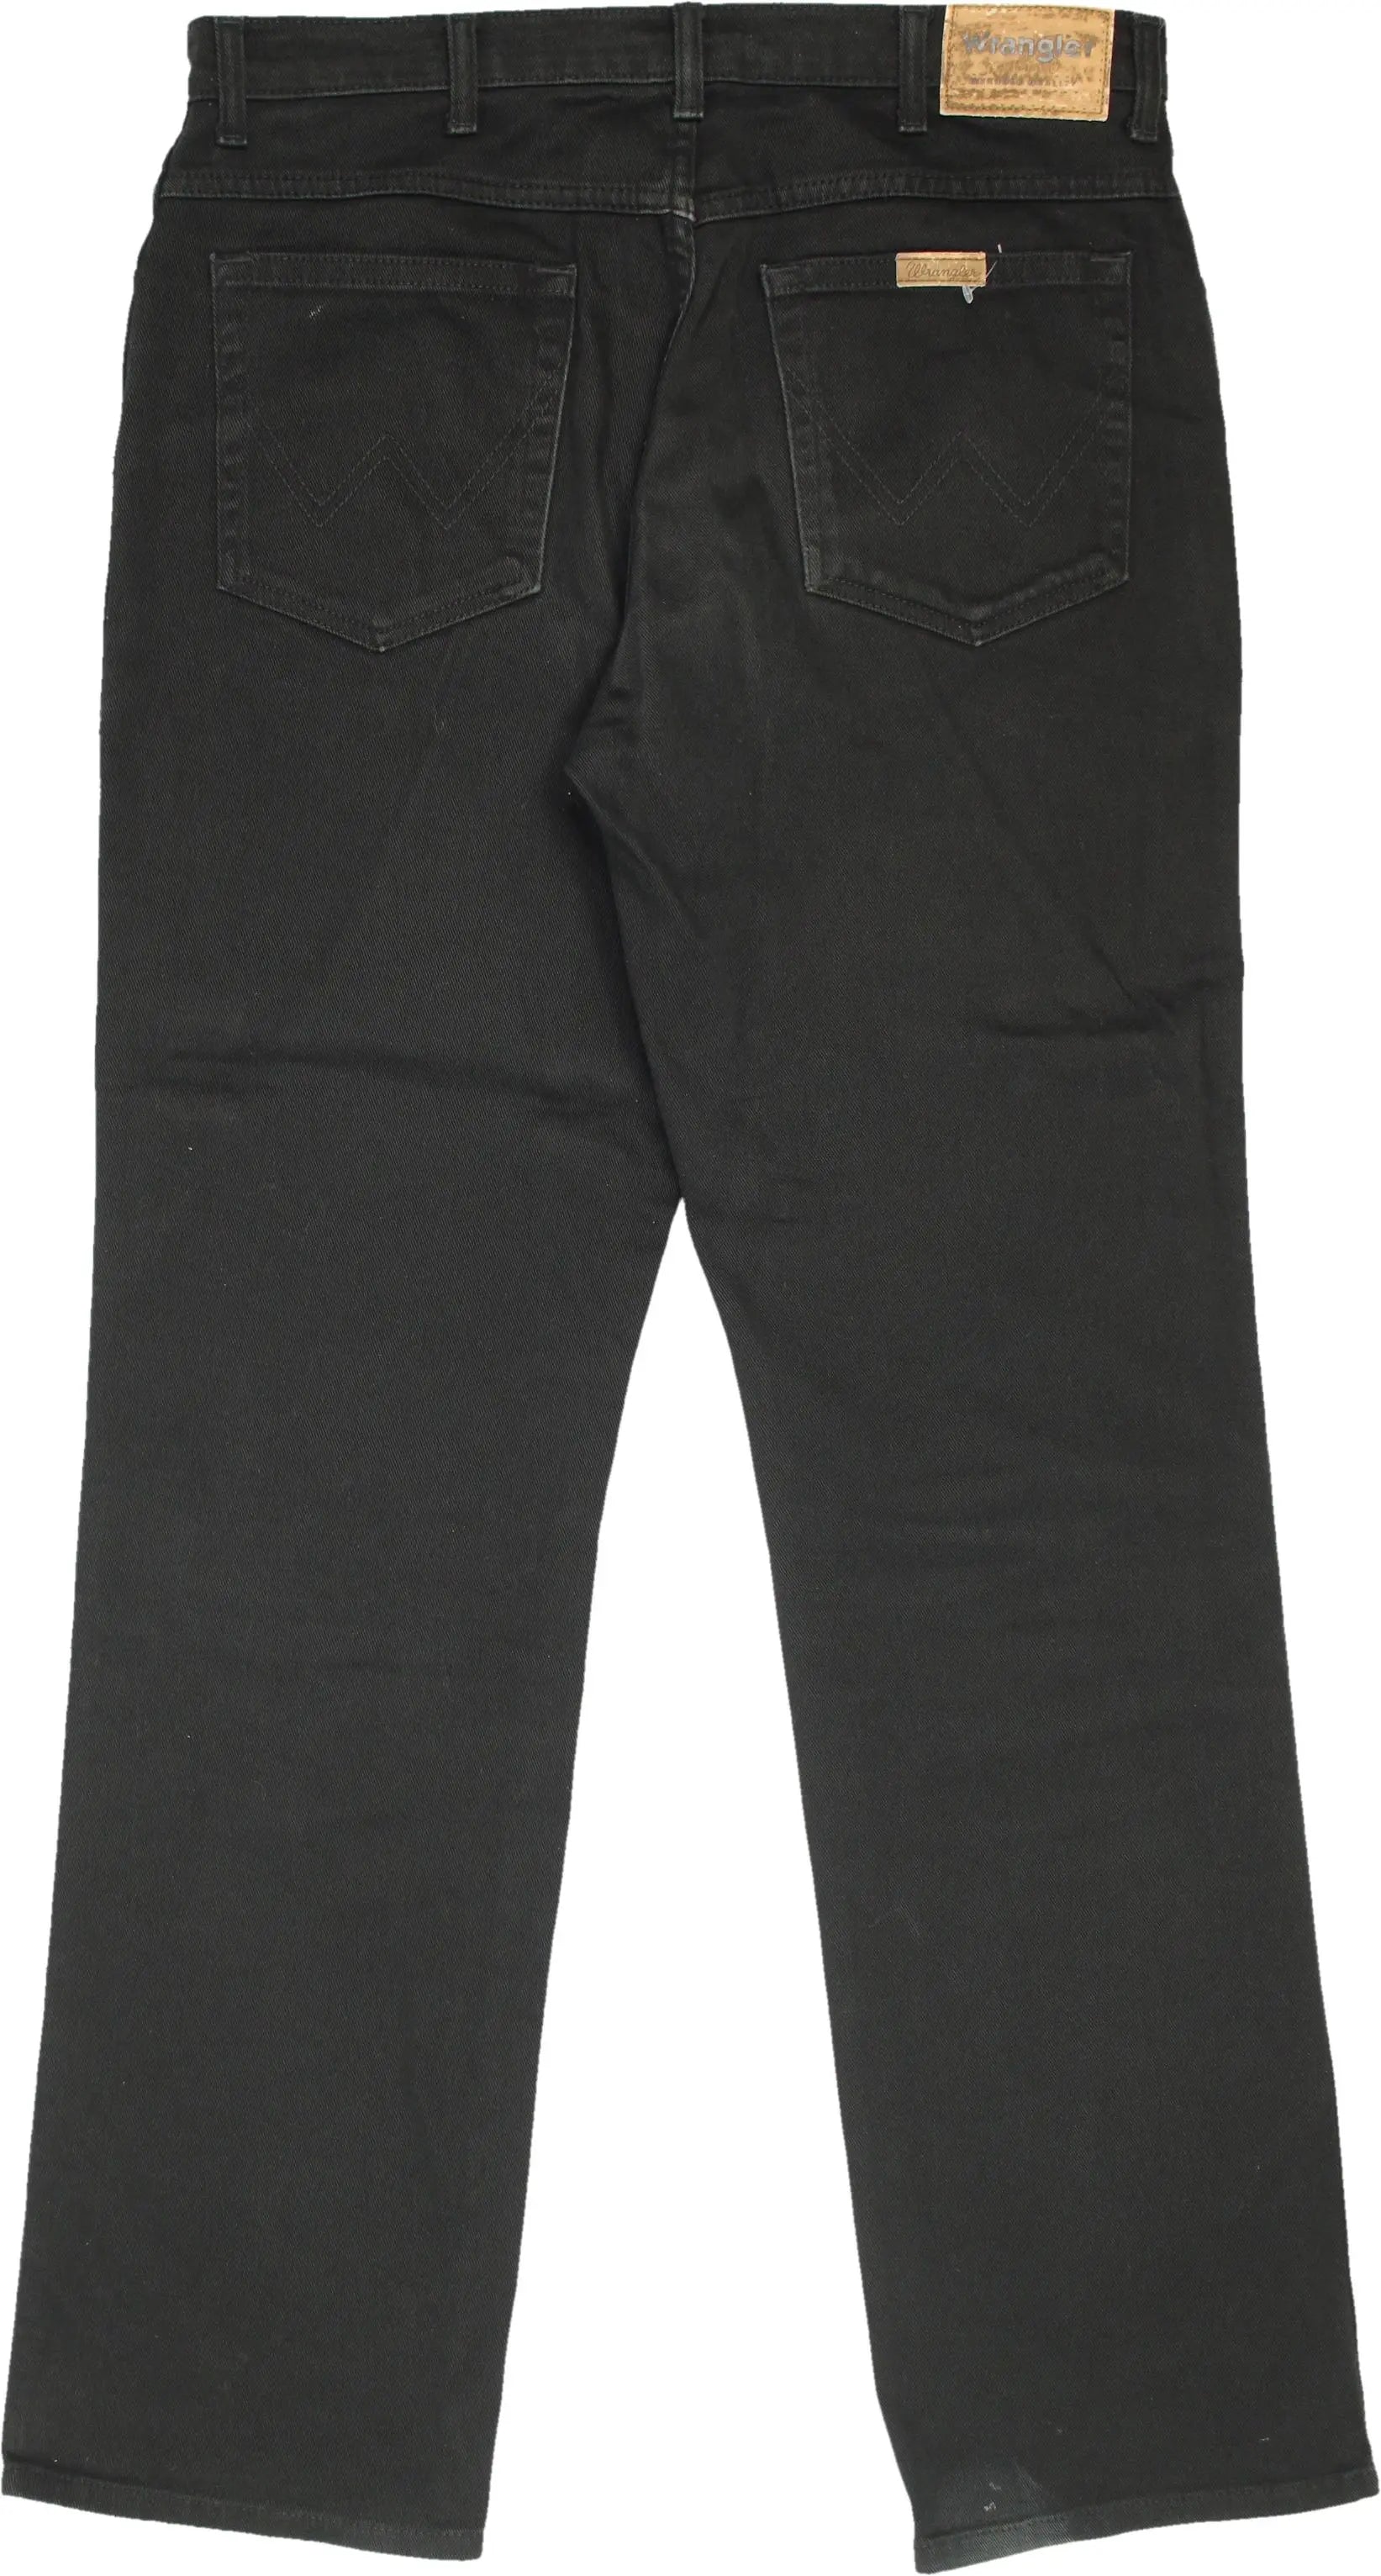 Wrangler - Wrangler Regular Fit Jeans- ThriftTale.com - Vintage and second handclothing